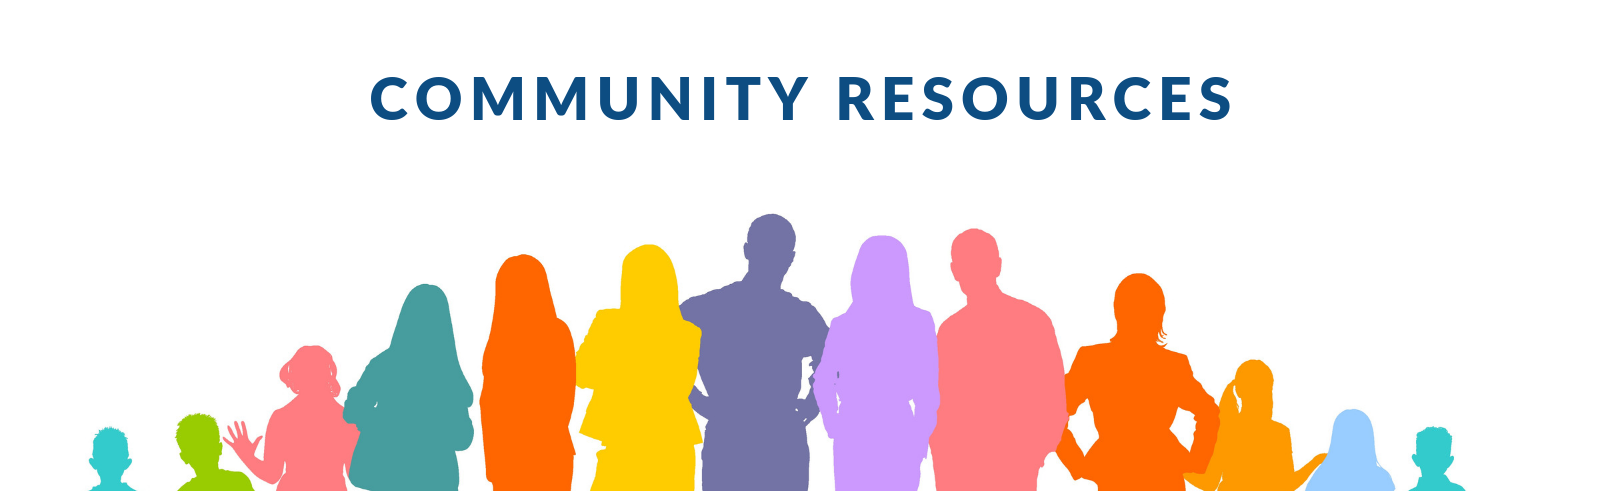 Community Partners Banner Image